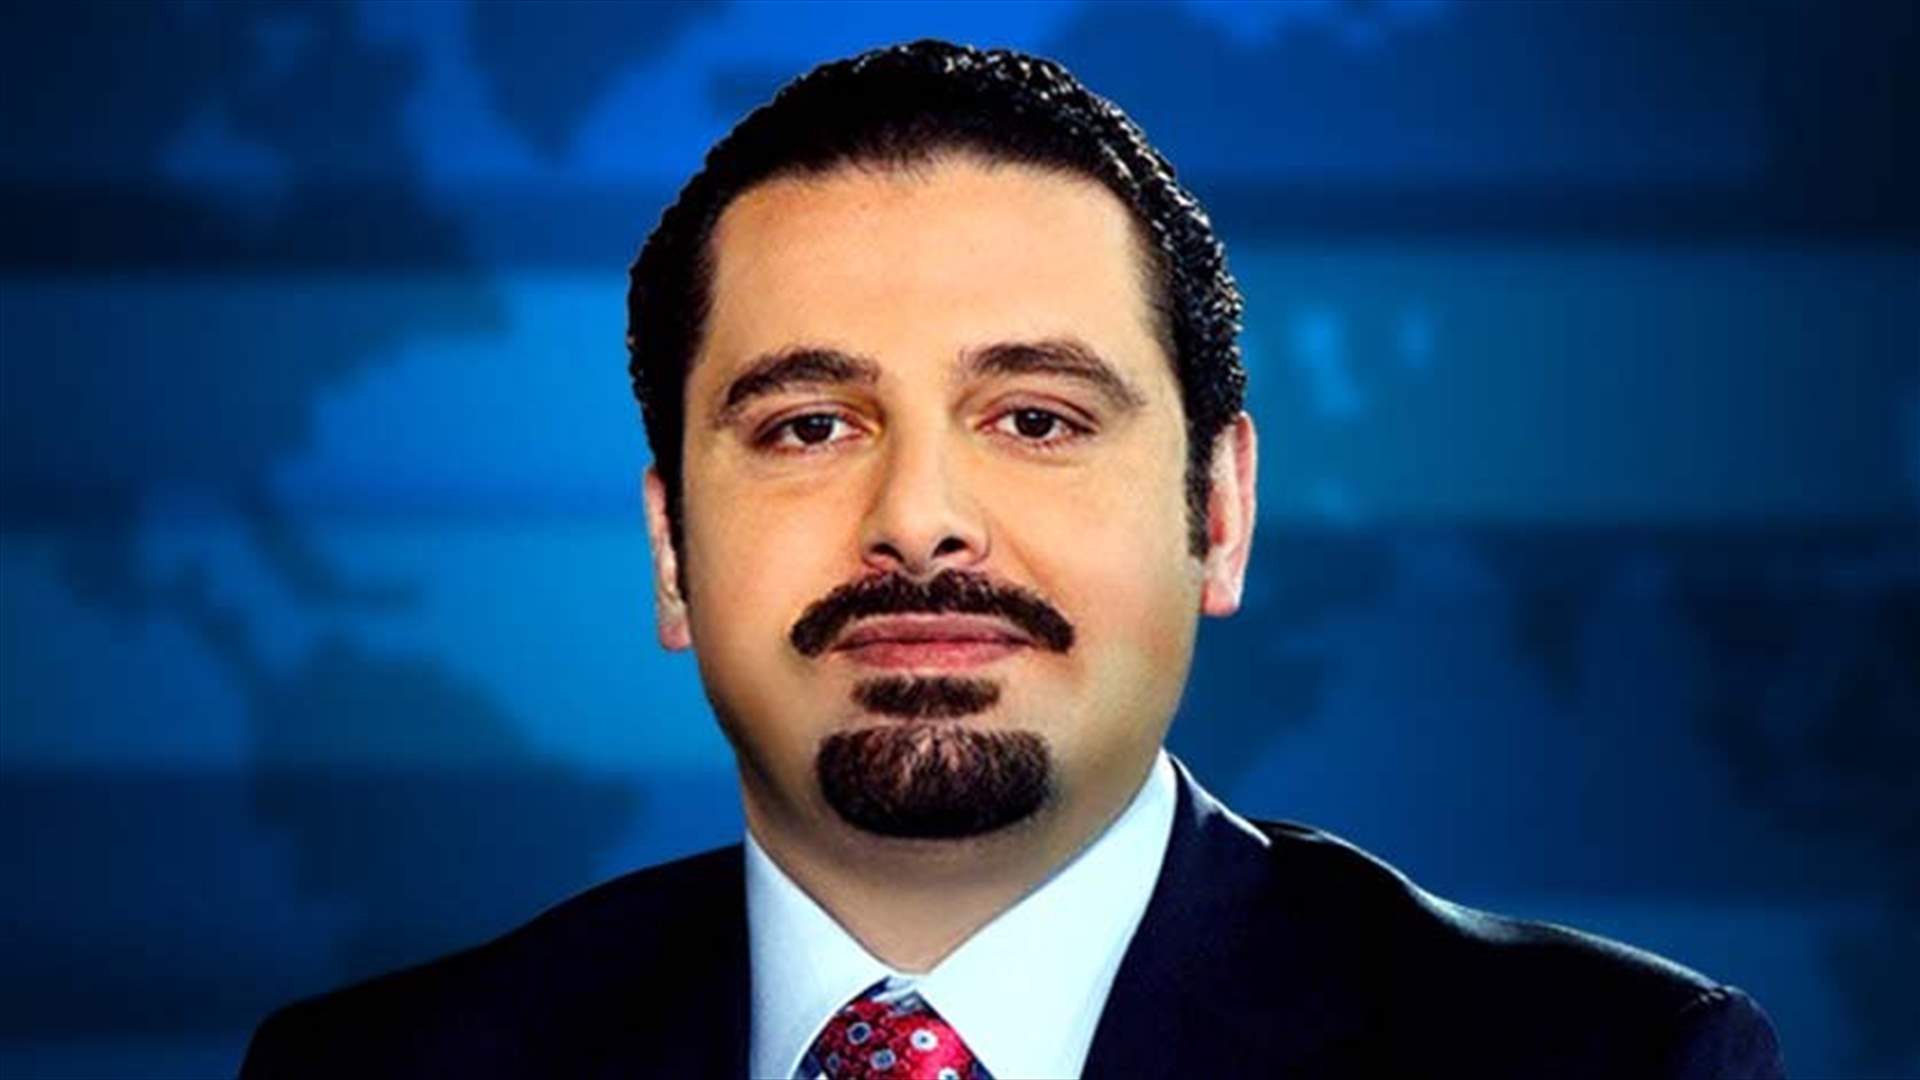 Saad Hariri: Iran Must Stop Meddling in Arab Affairs